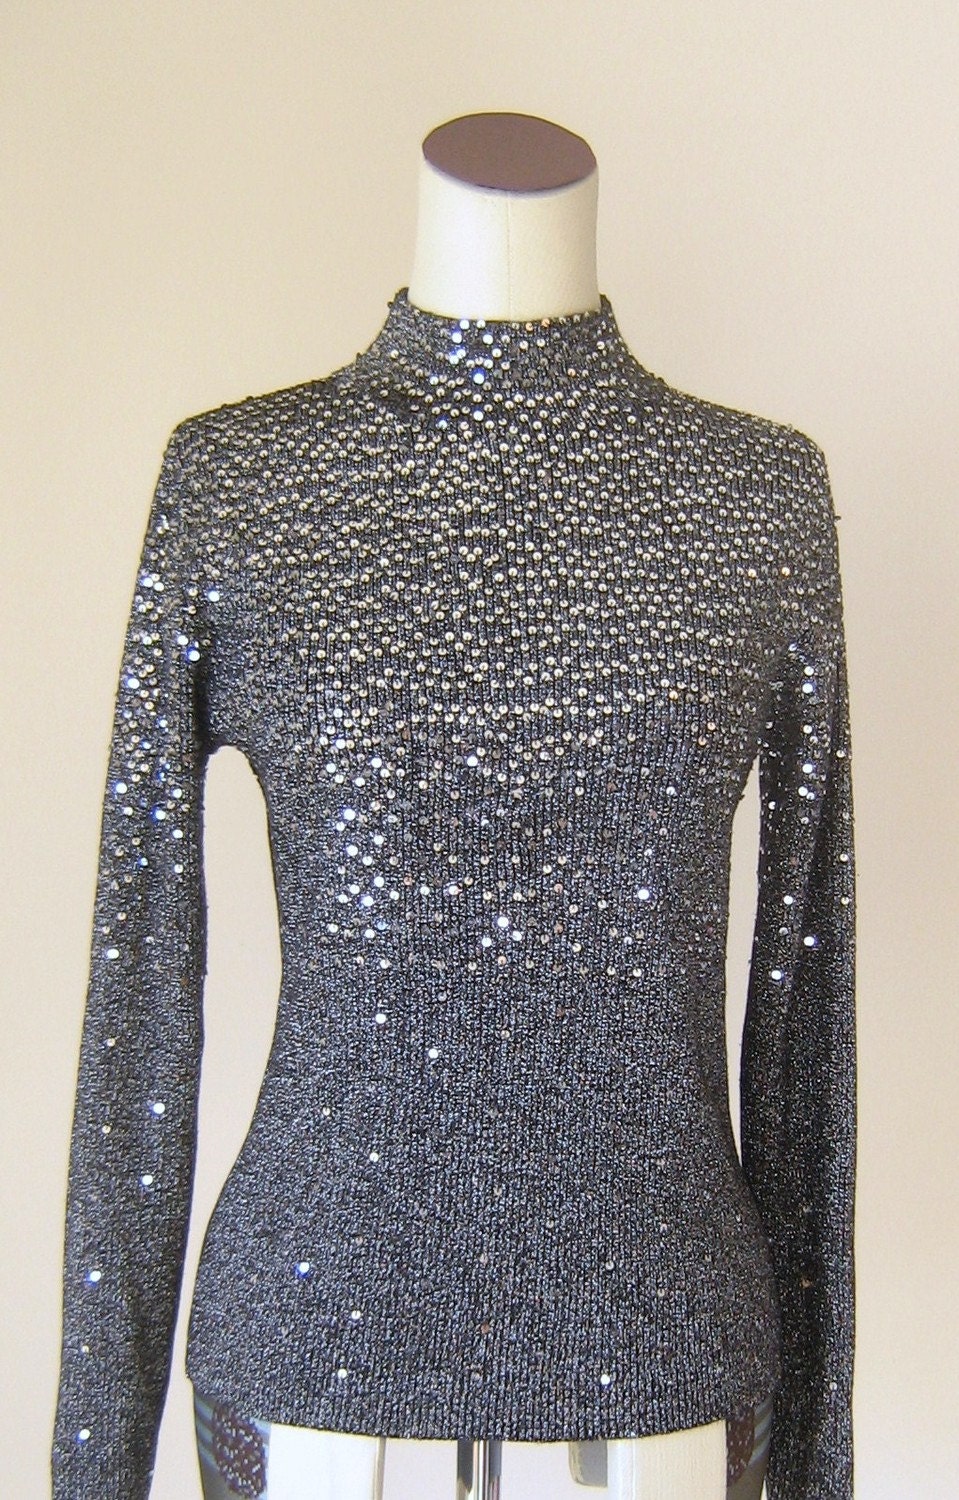 Sparkling Silver Sequin Turtleneck Sweater by RetroFascination